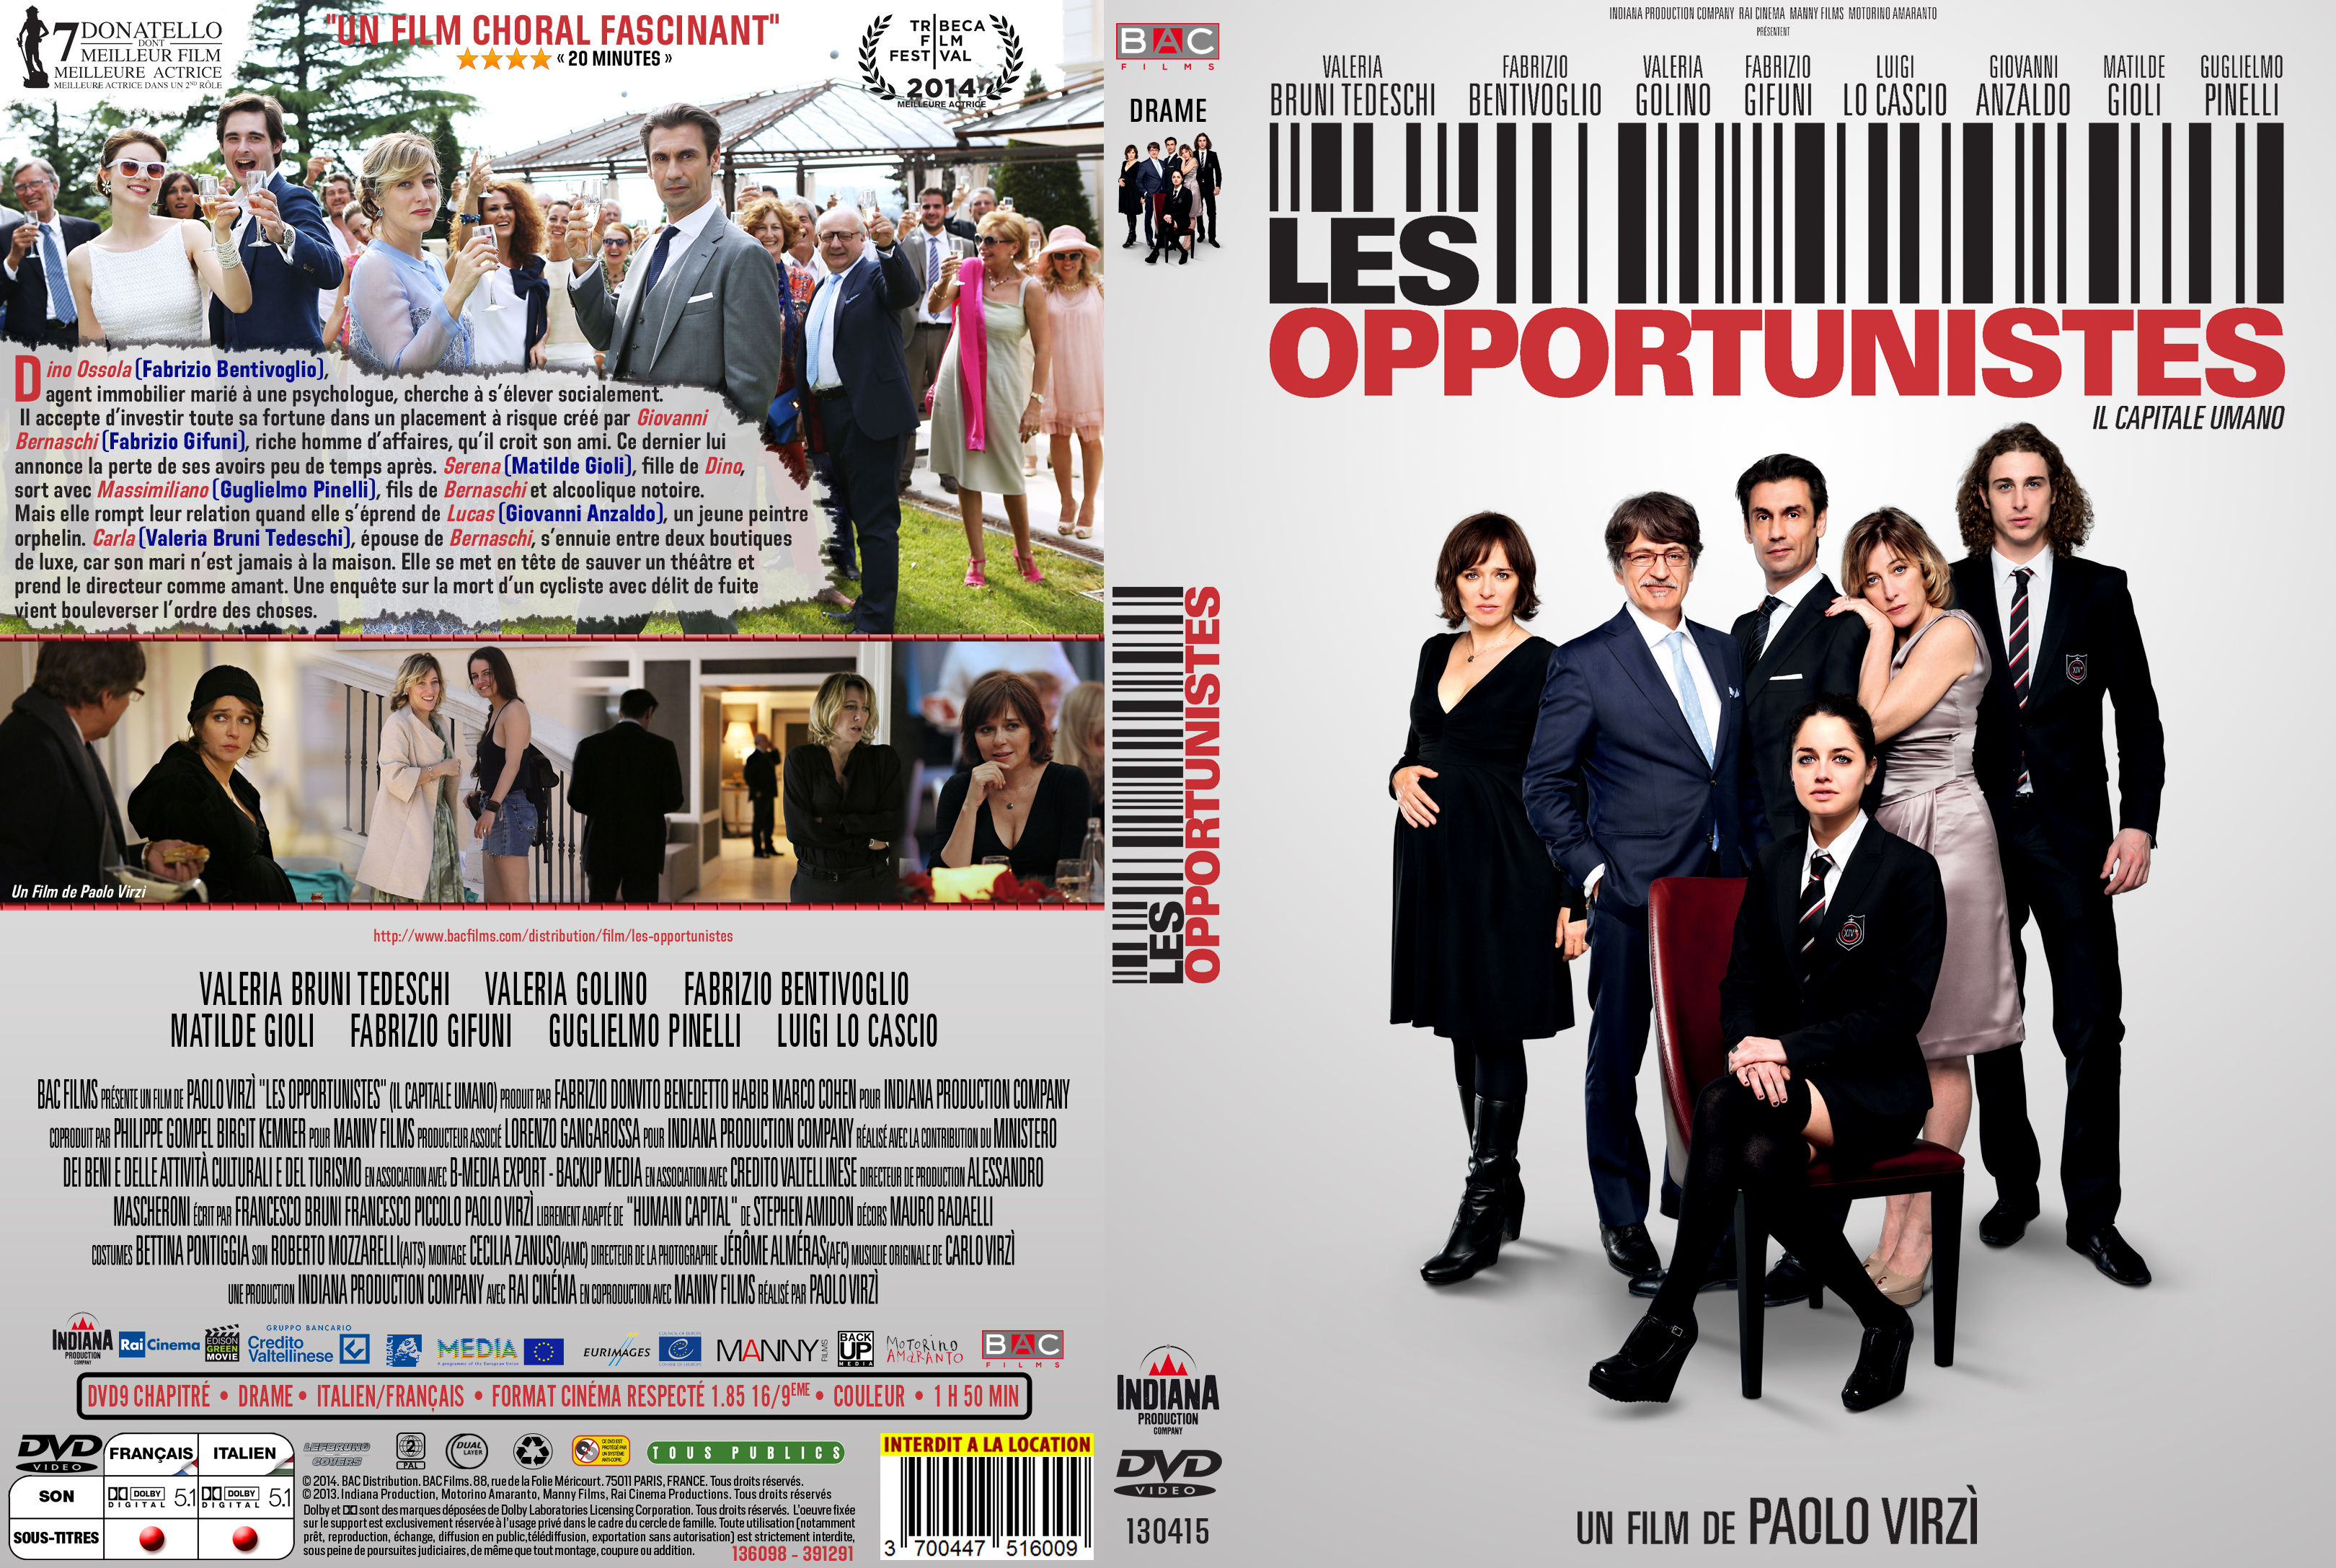 Jaquette DVD Les opportunistes (2013) custom